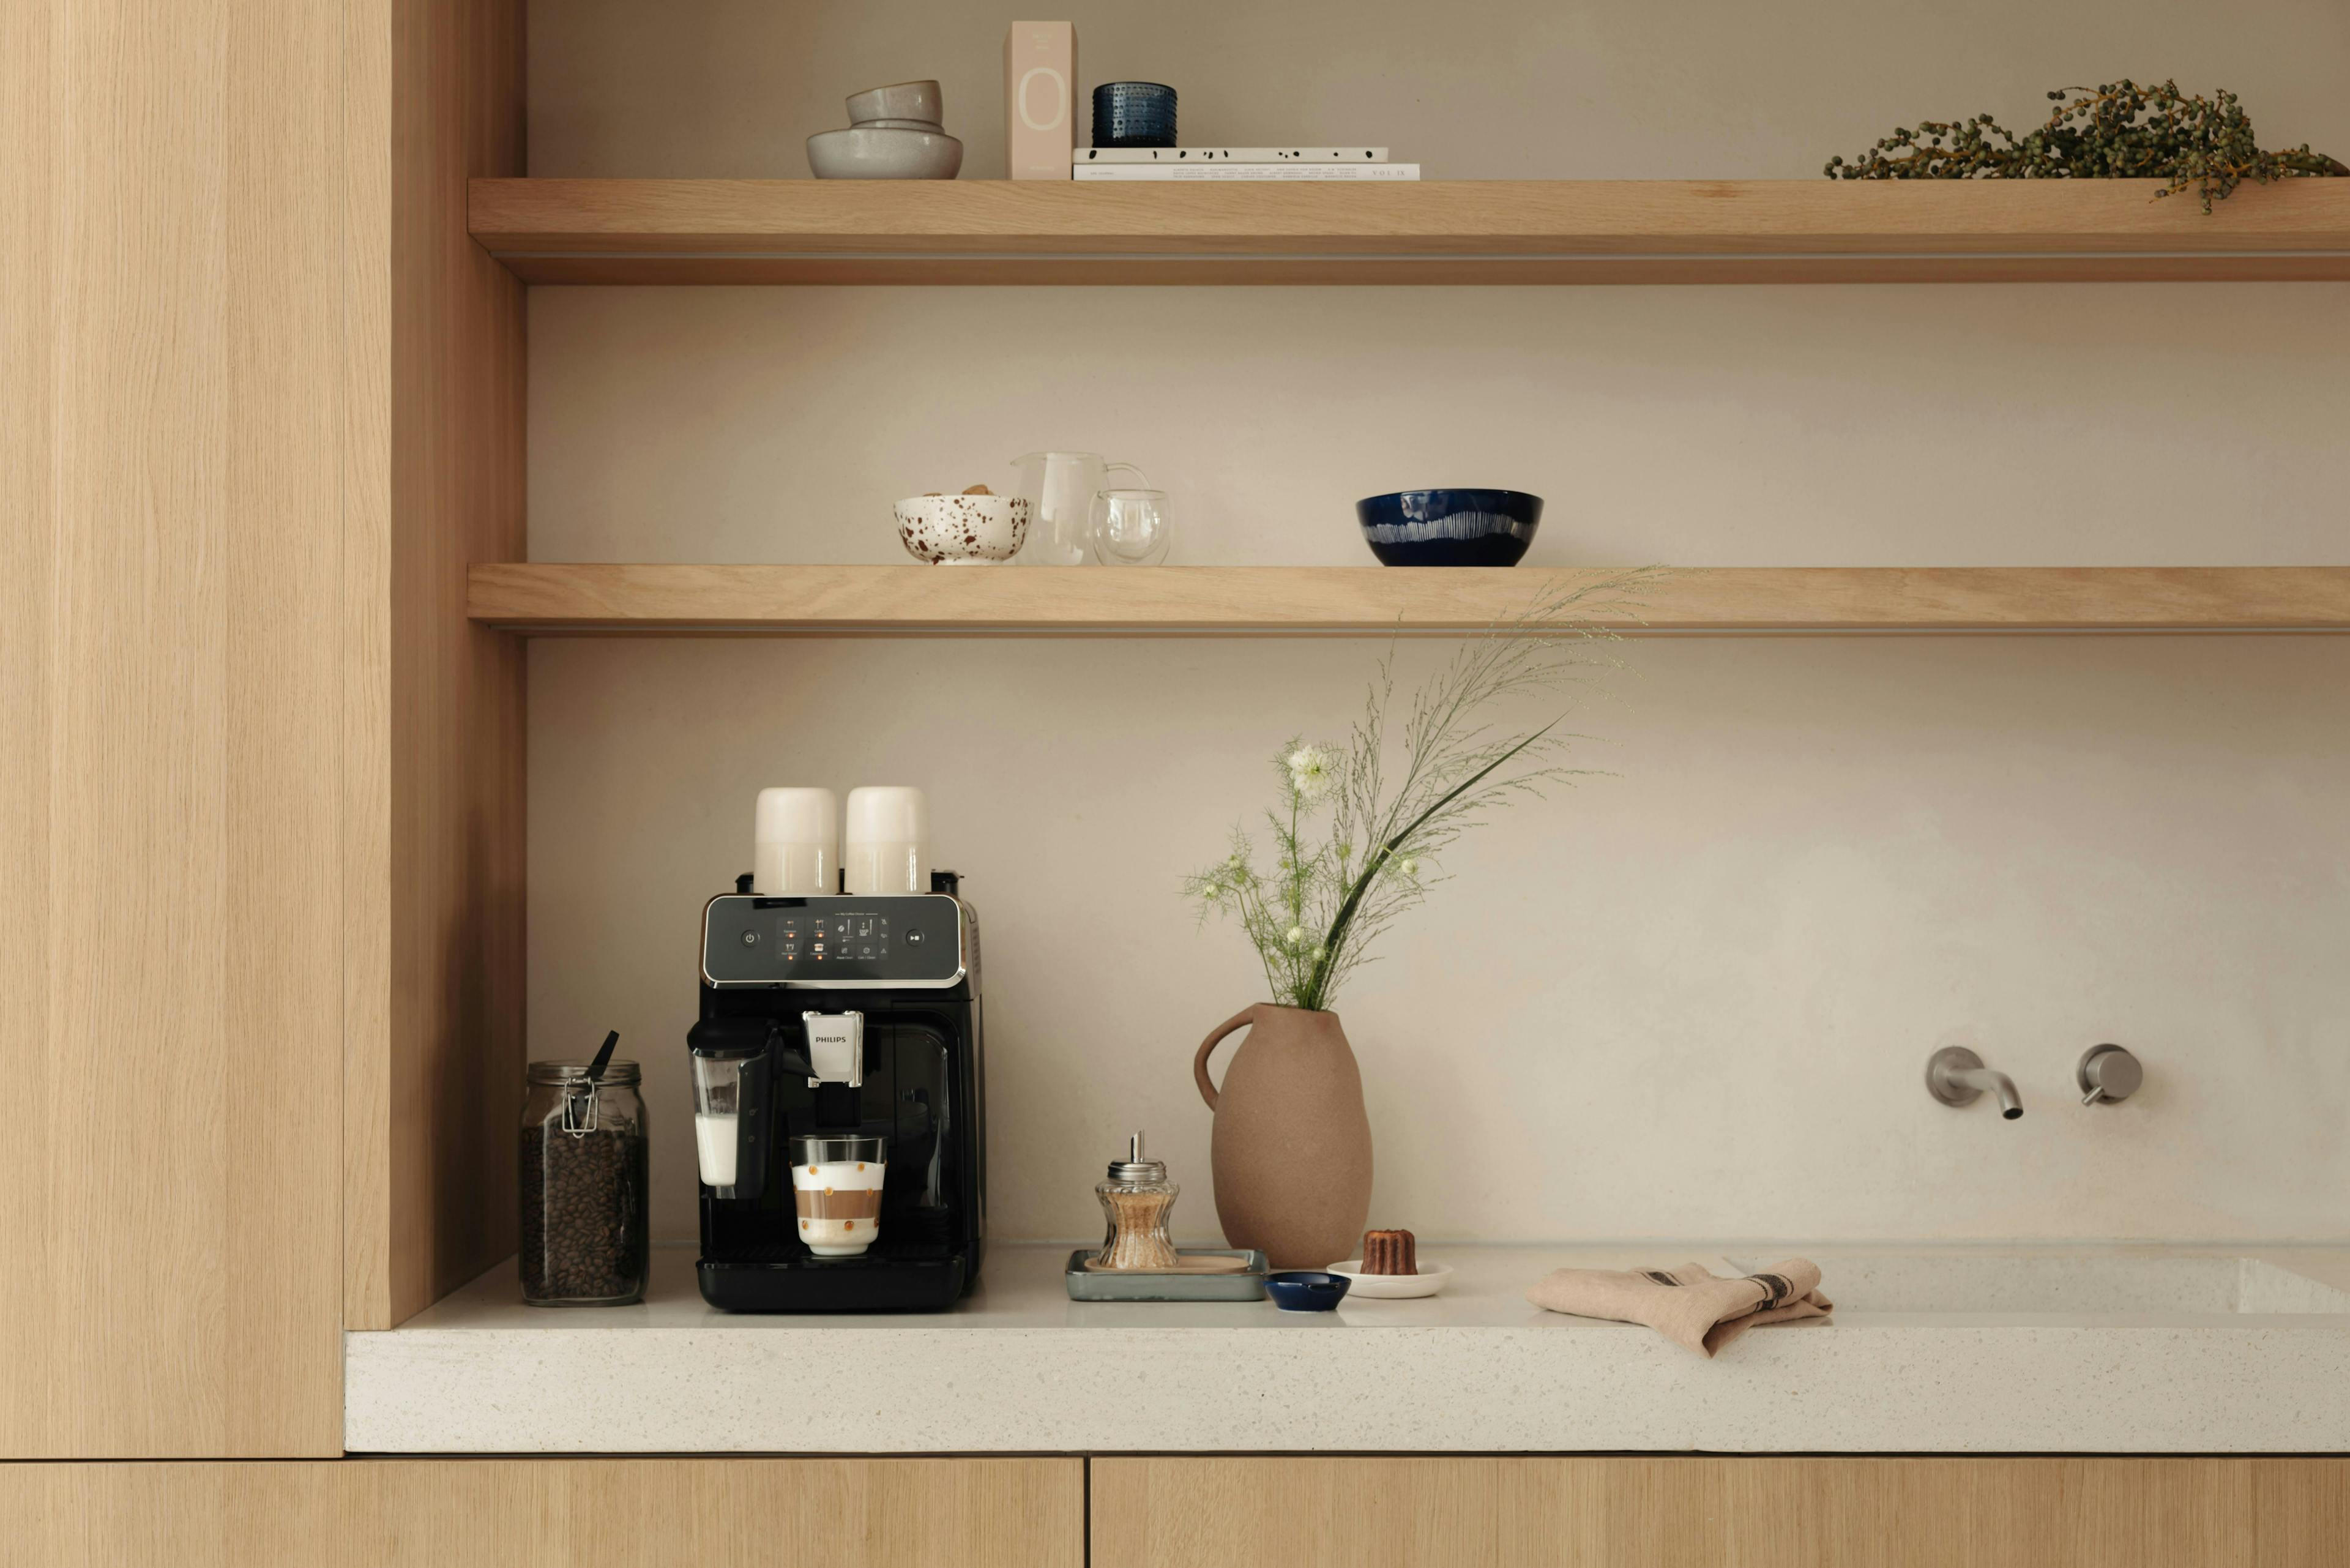 shelf indoors interior design furniture cabinet electronics speaker closet cupboard pottery